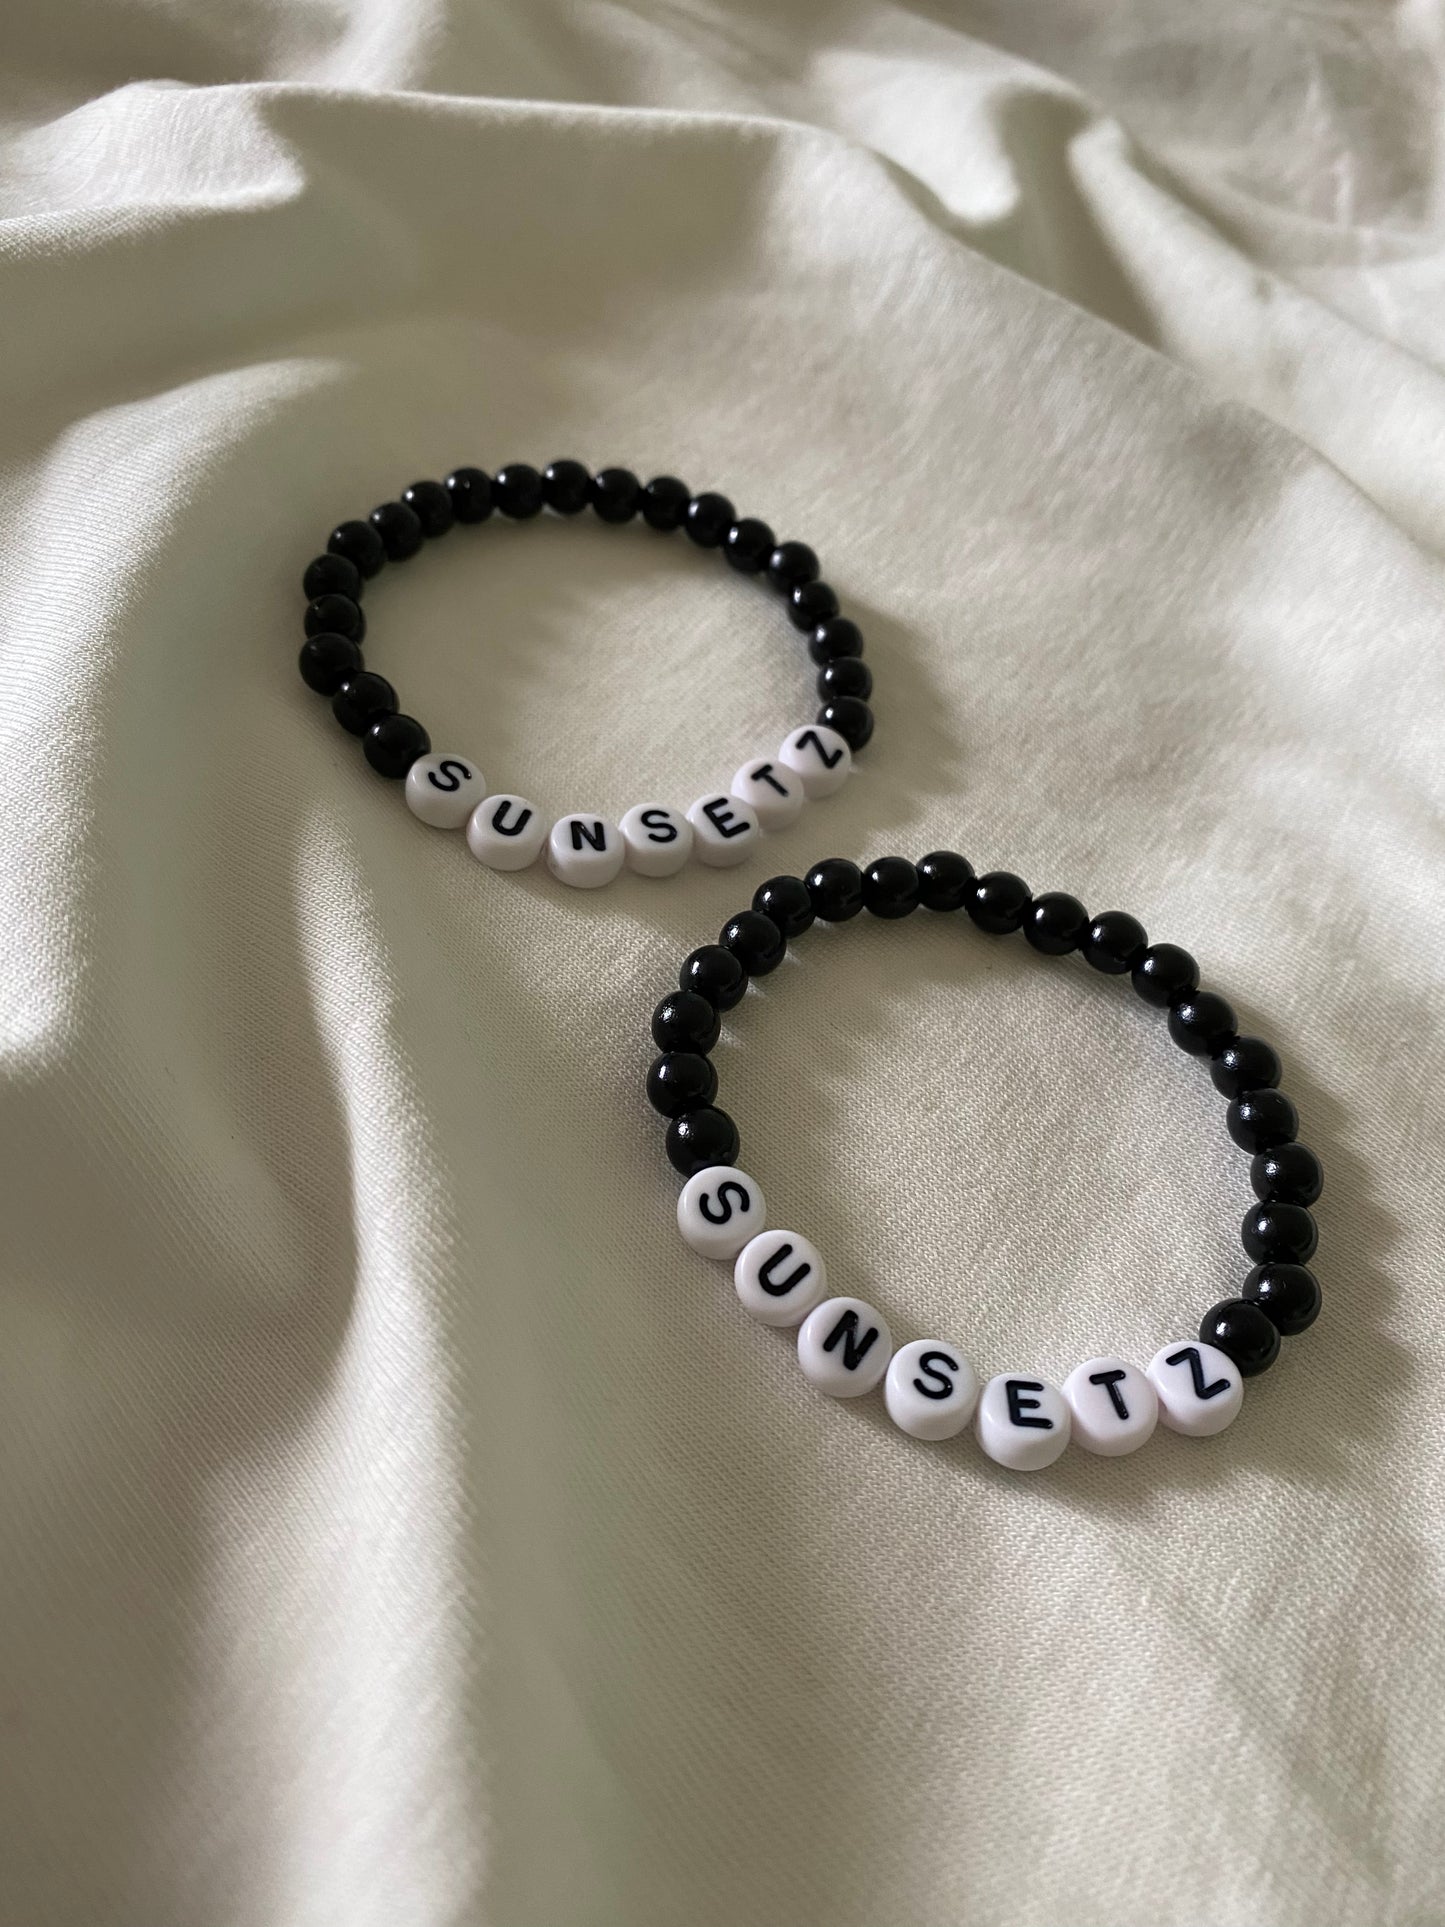 Sunsetz matching bracelets